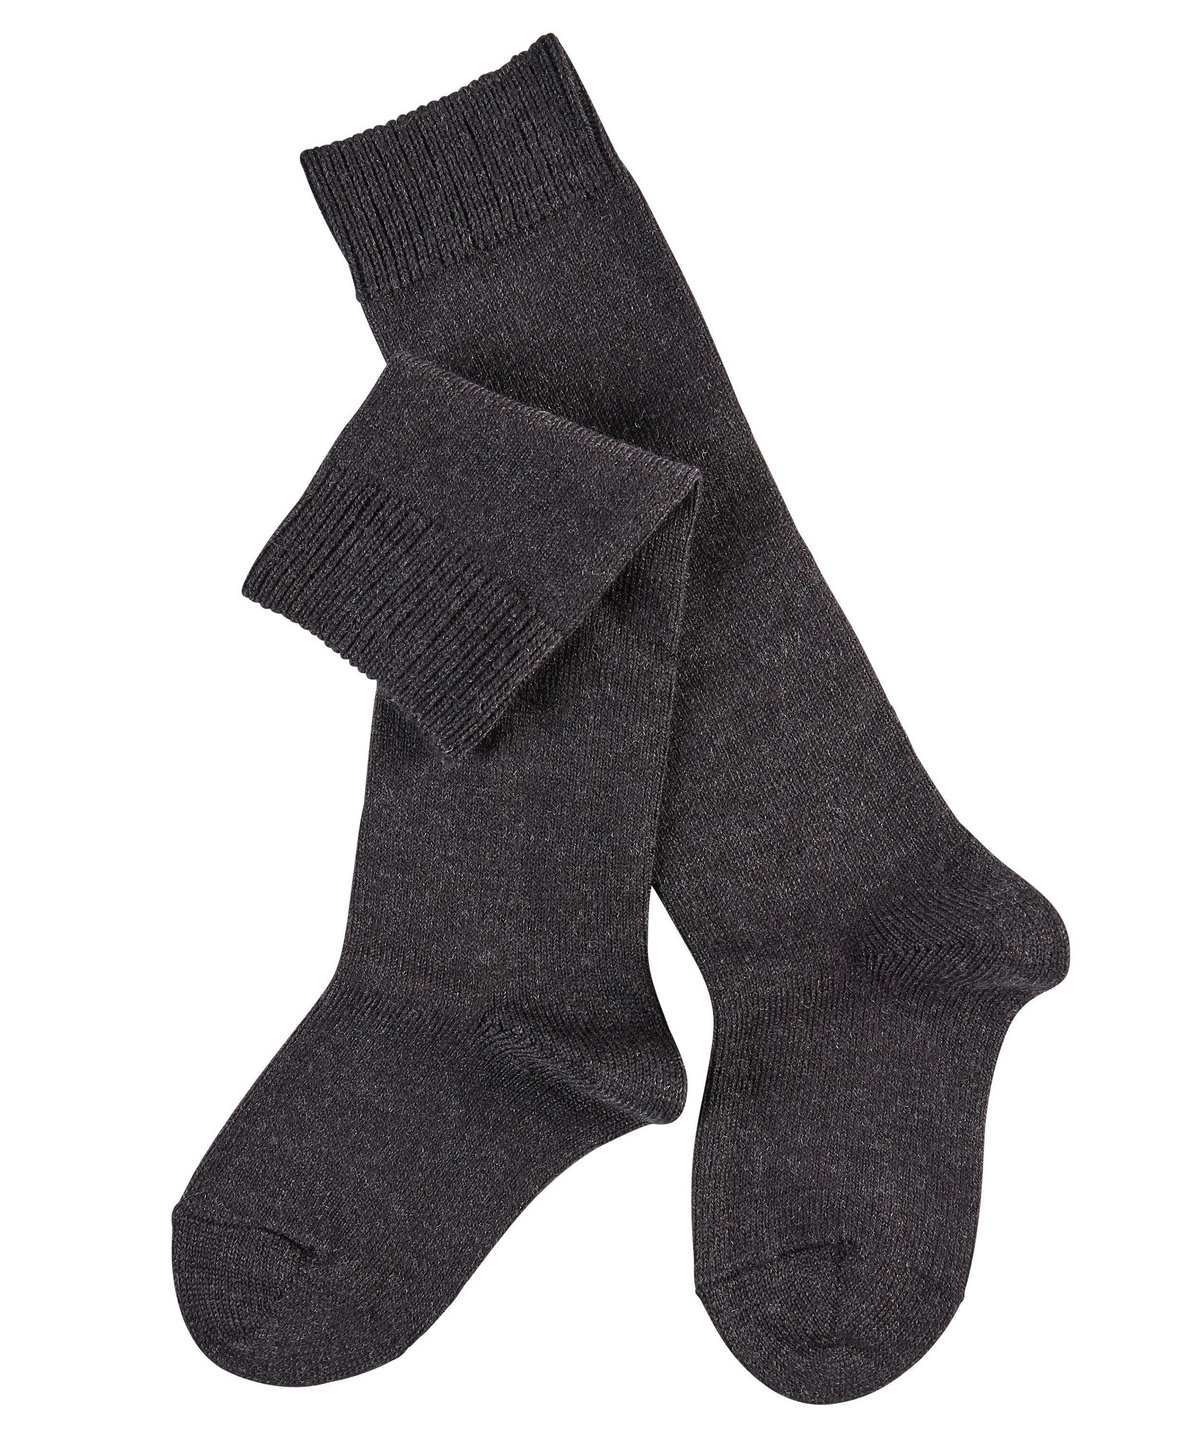 FALKE Unisex Kids Comfort Wool Socks